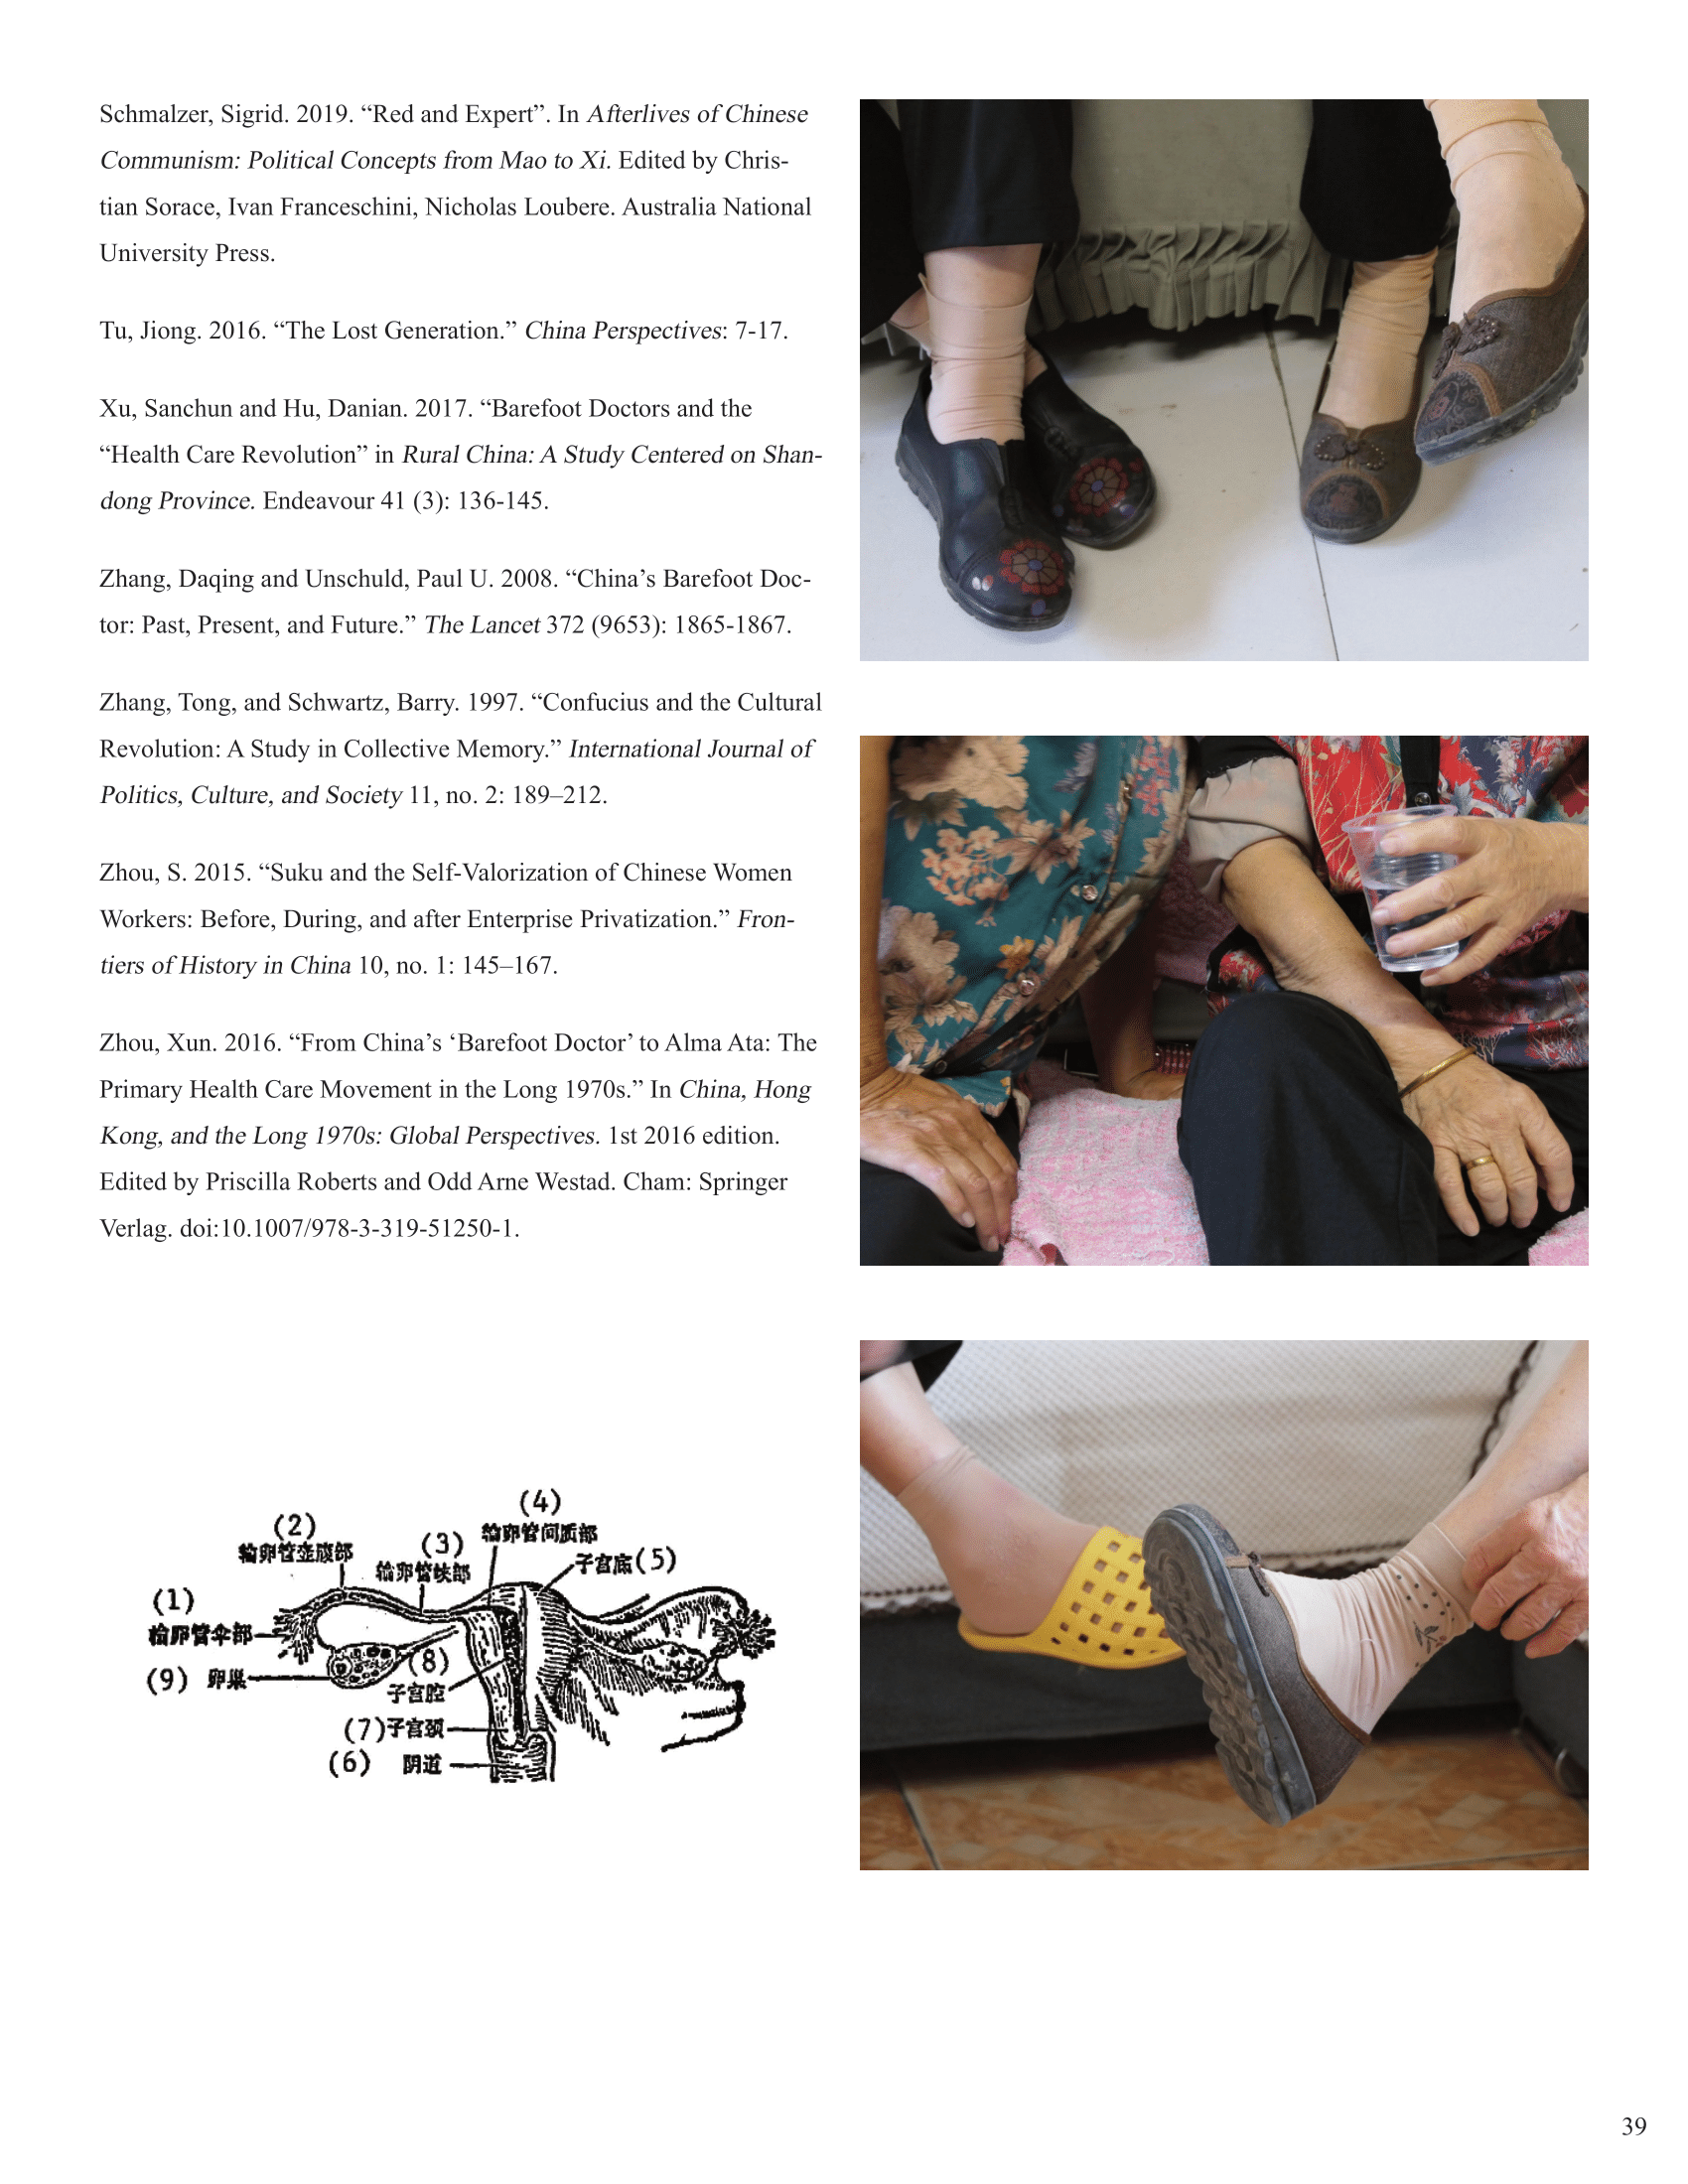 Zhang, Faye_Final Project, Memoir of a Barefoot Doctor-39.png